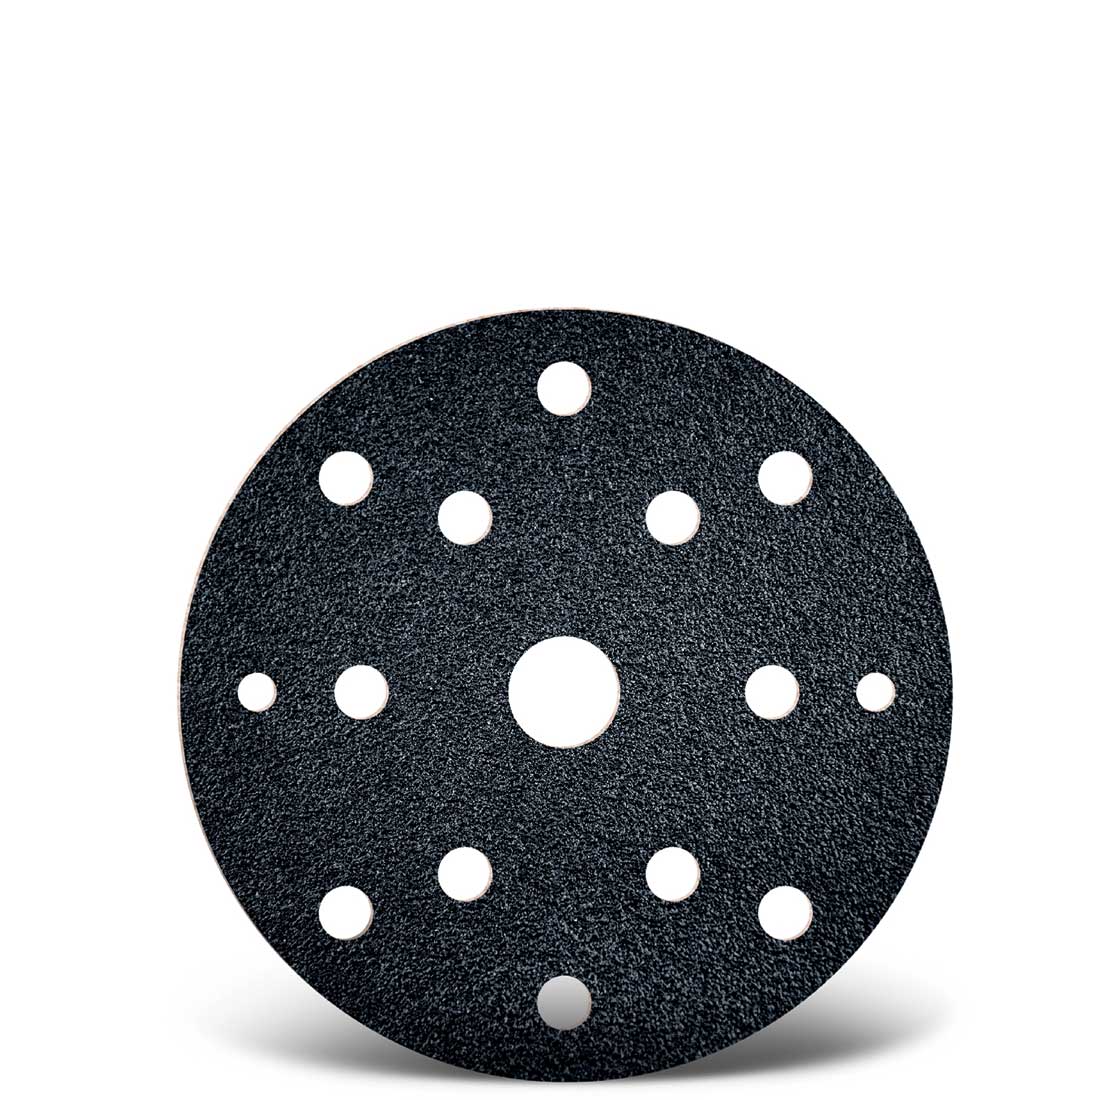 MENZER hook & loop sanding discs for random orbital sanders, G24–800, Ø 150 mm / 15 hole / silicon carbide